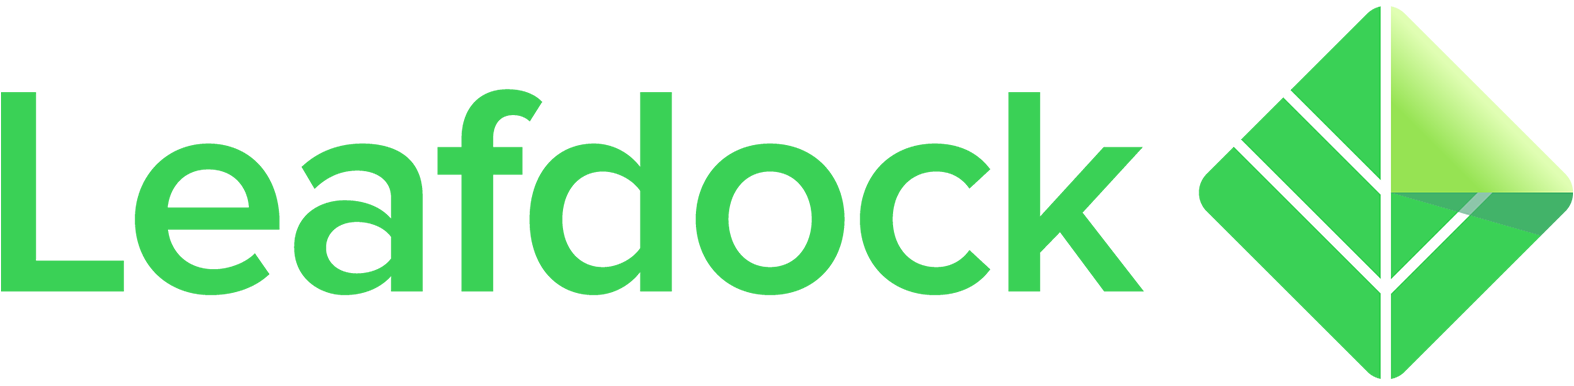 leafdock logo